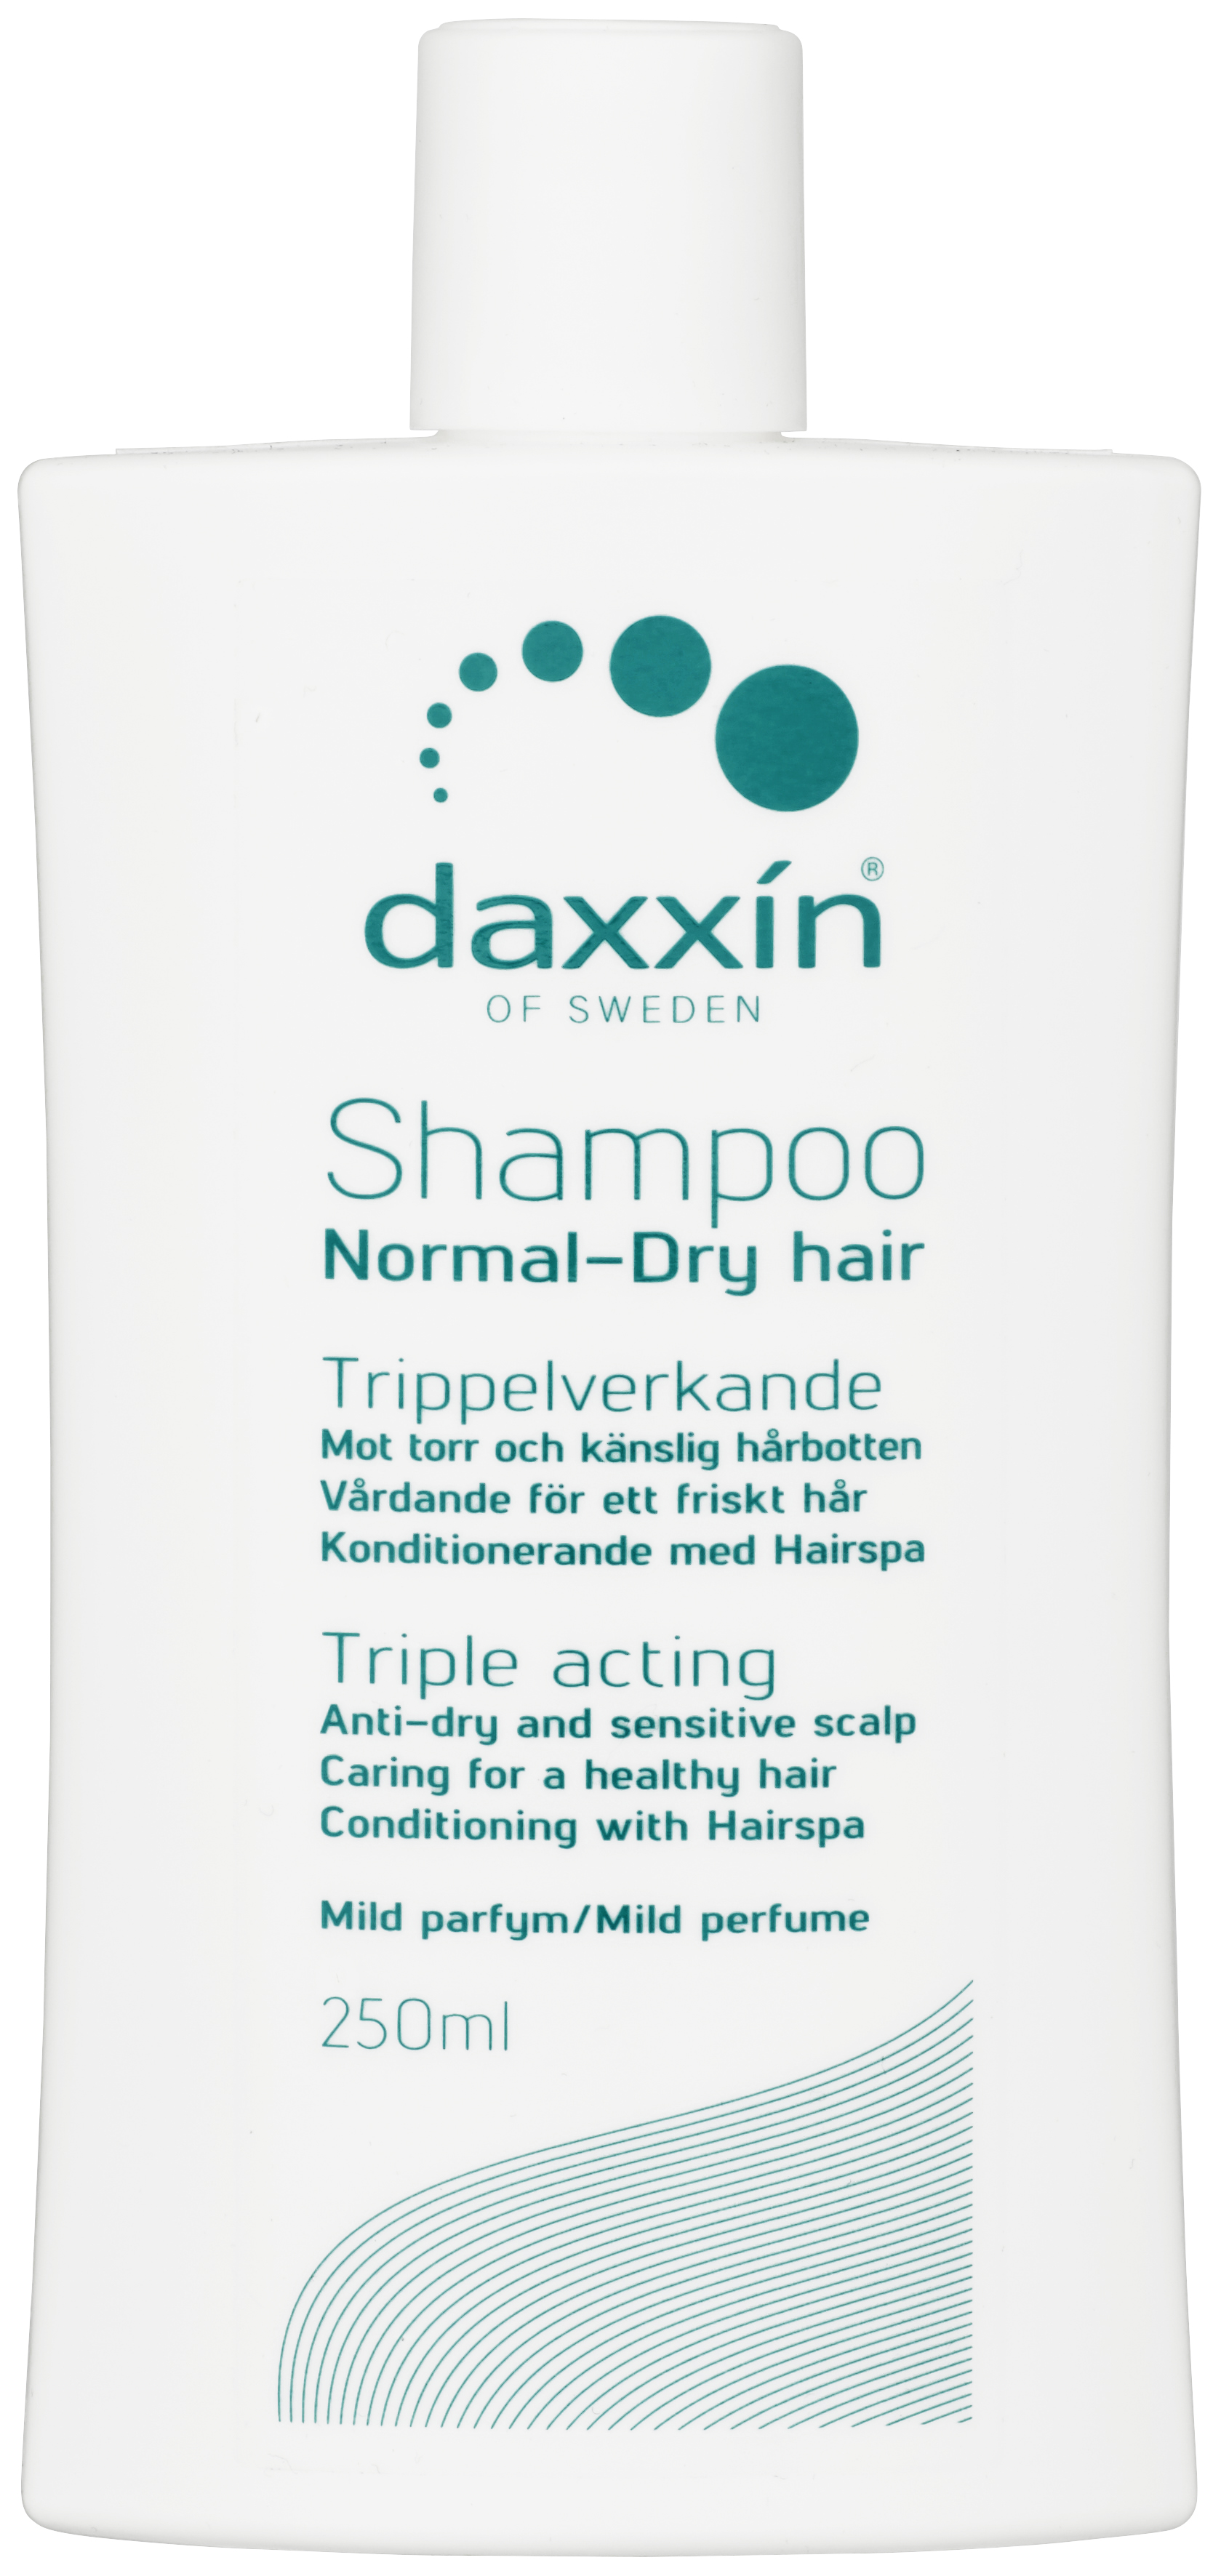 Daxxin Daxxin Shampoo Normal-Dry Hair, Flaske 250ml